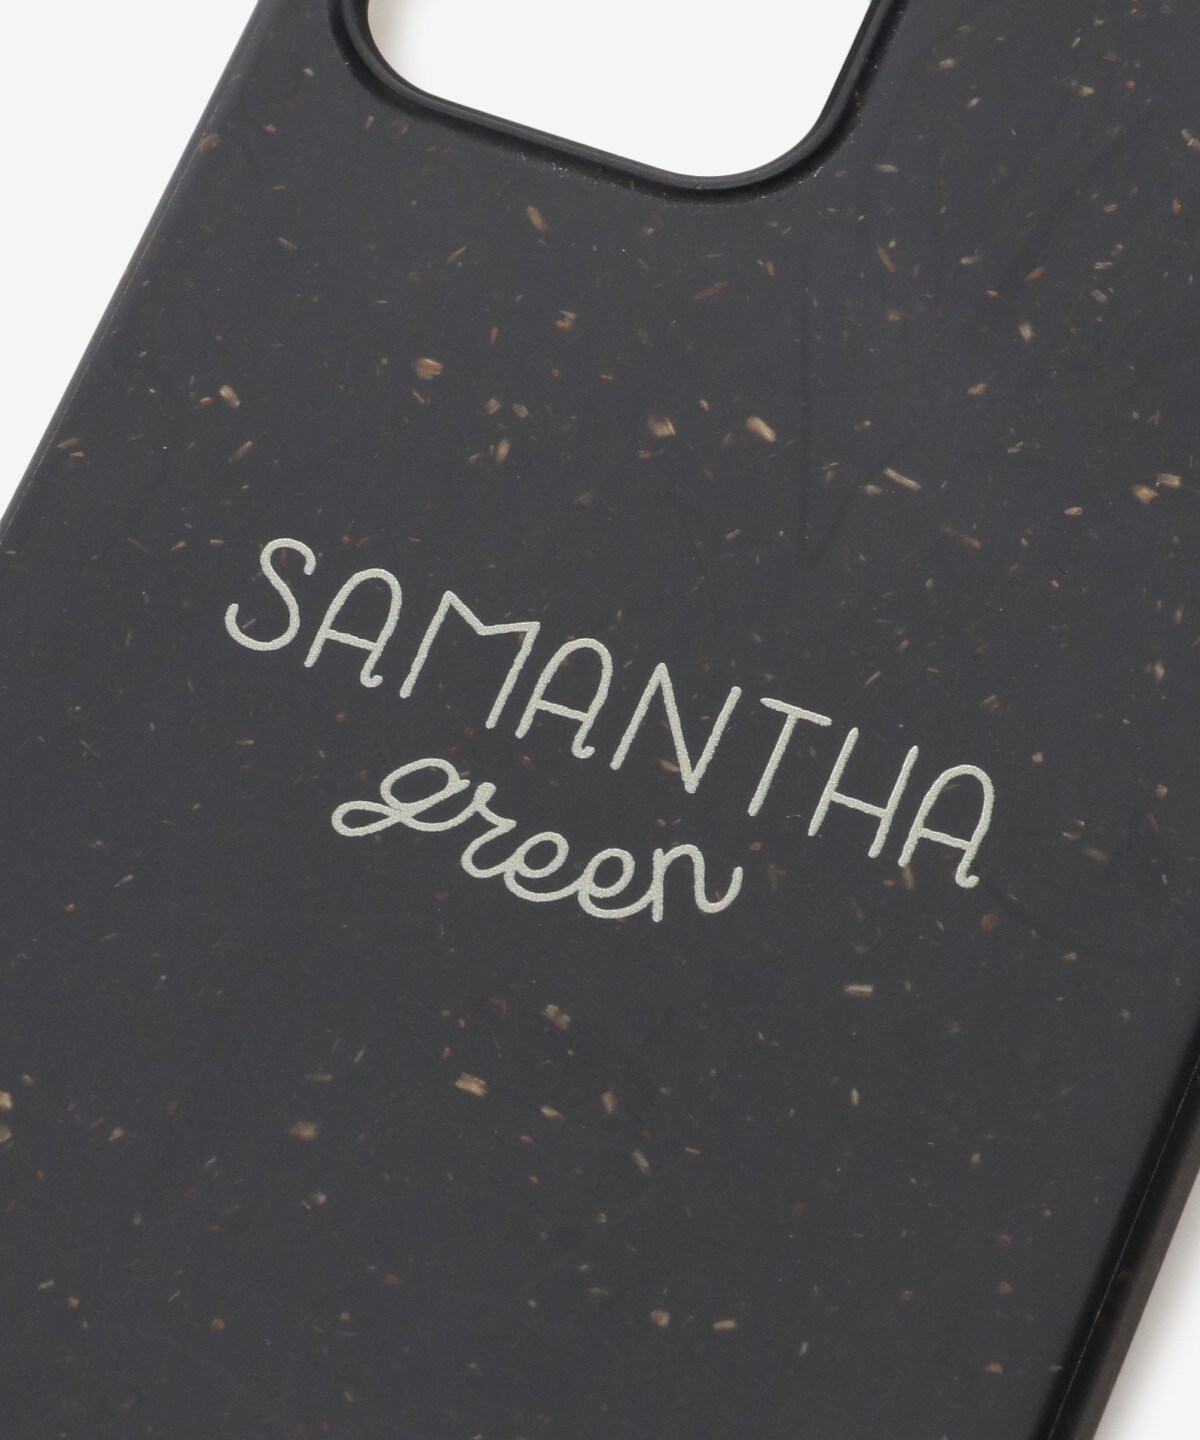 Samantha Green iphone12miniケース(FREE ブラック): Samantha Thavasa 